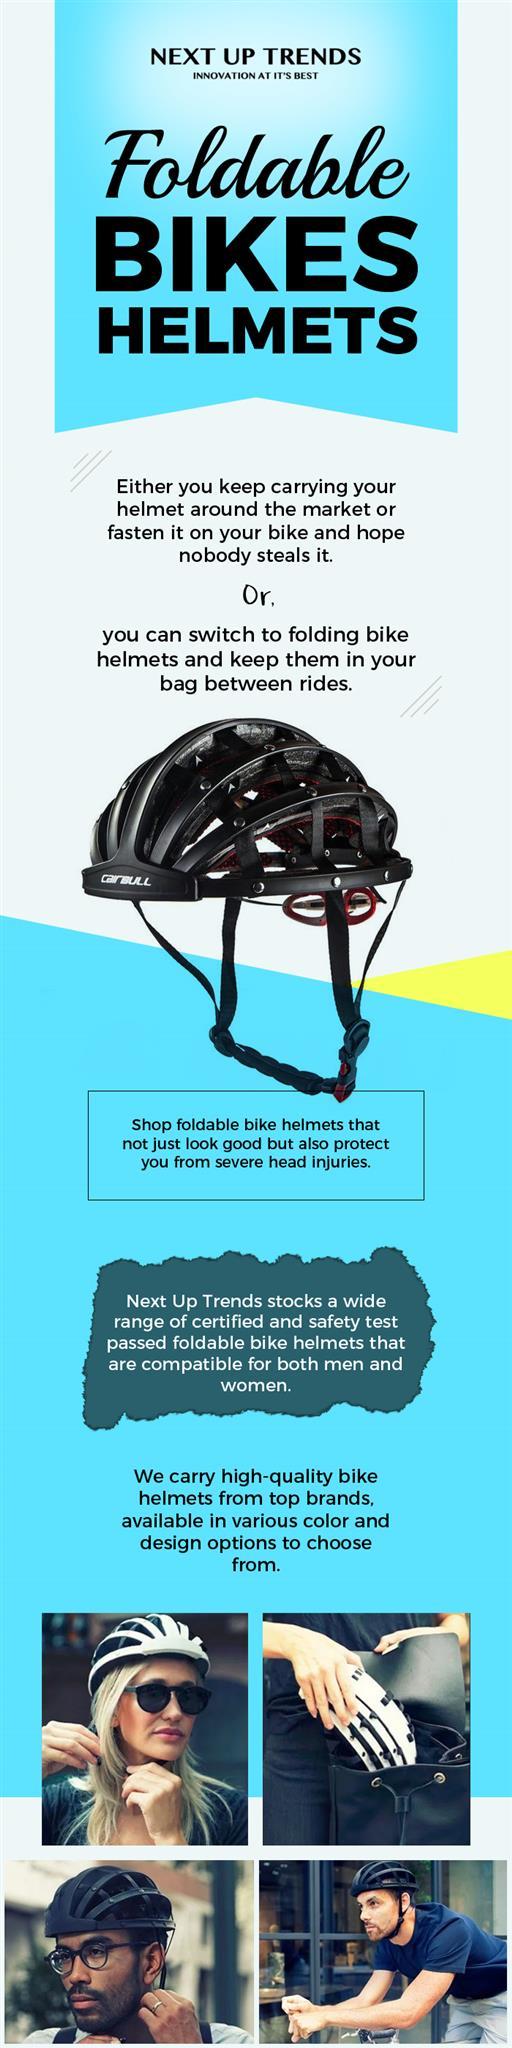 Buy Next-Gen Folding Bike Helmets from Next Up Trends